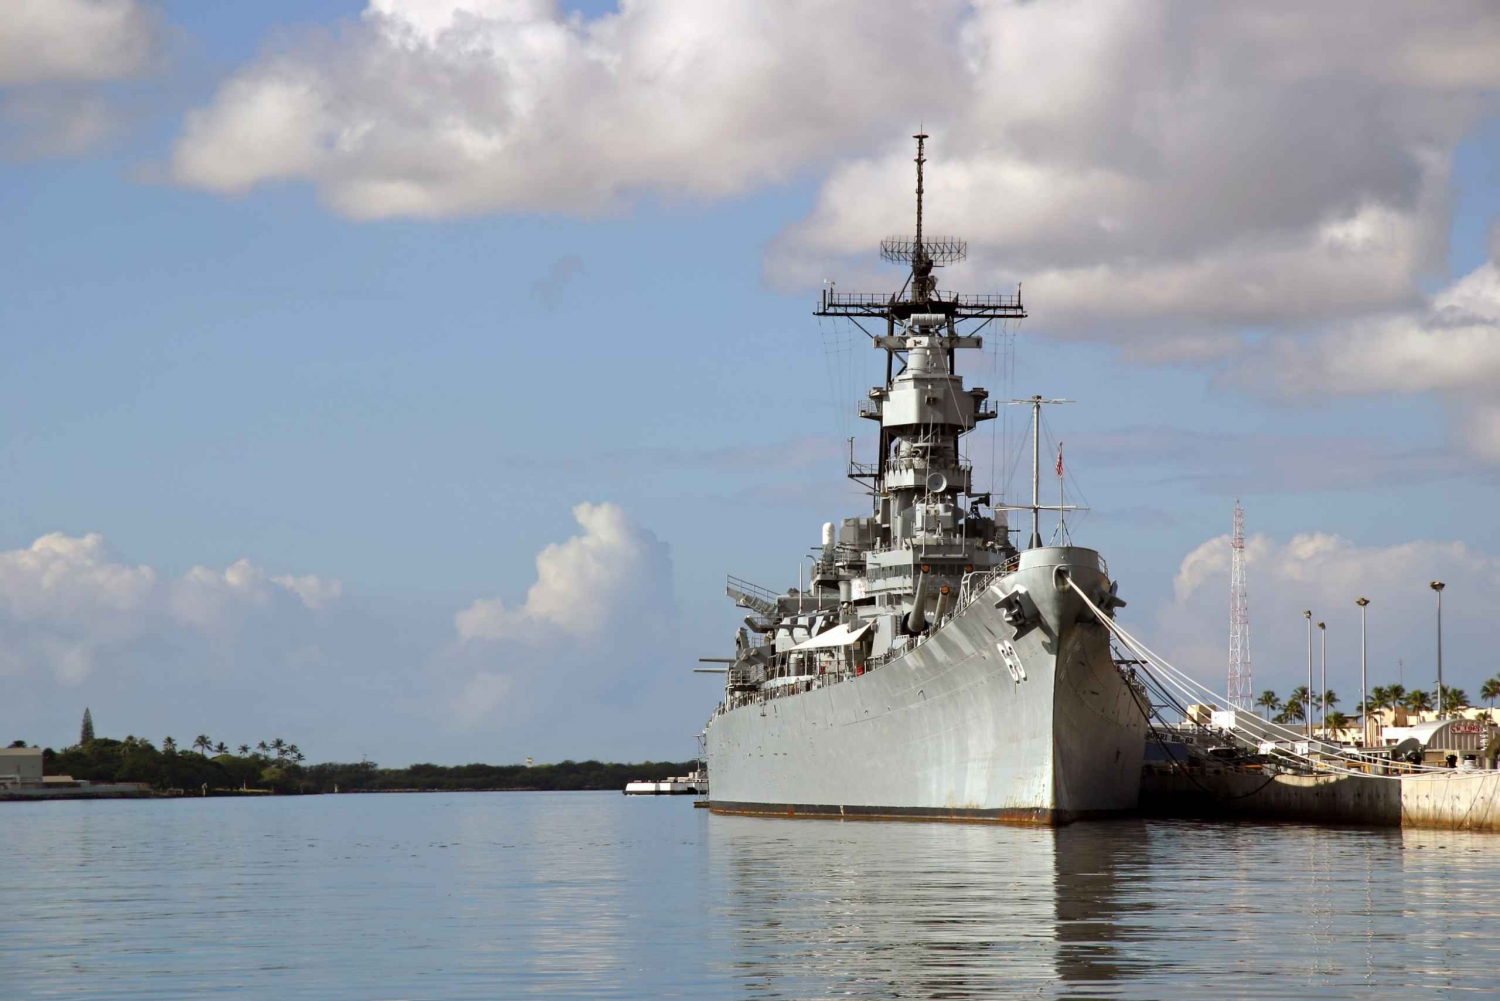 Oahu : Pearl Harbor, USS Arizona, Might Mo, & Honolulu Tour